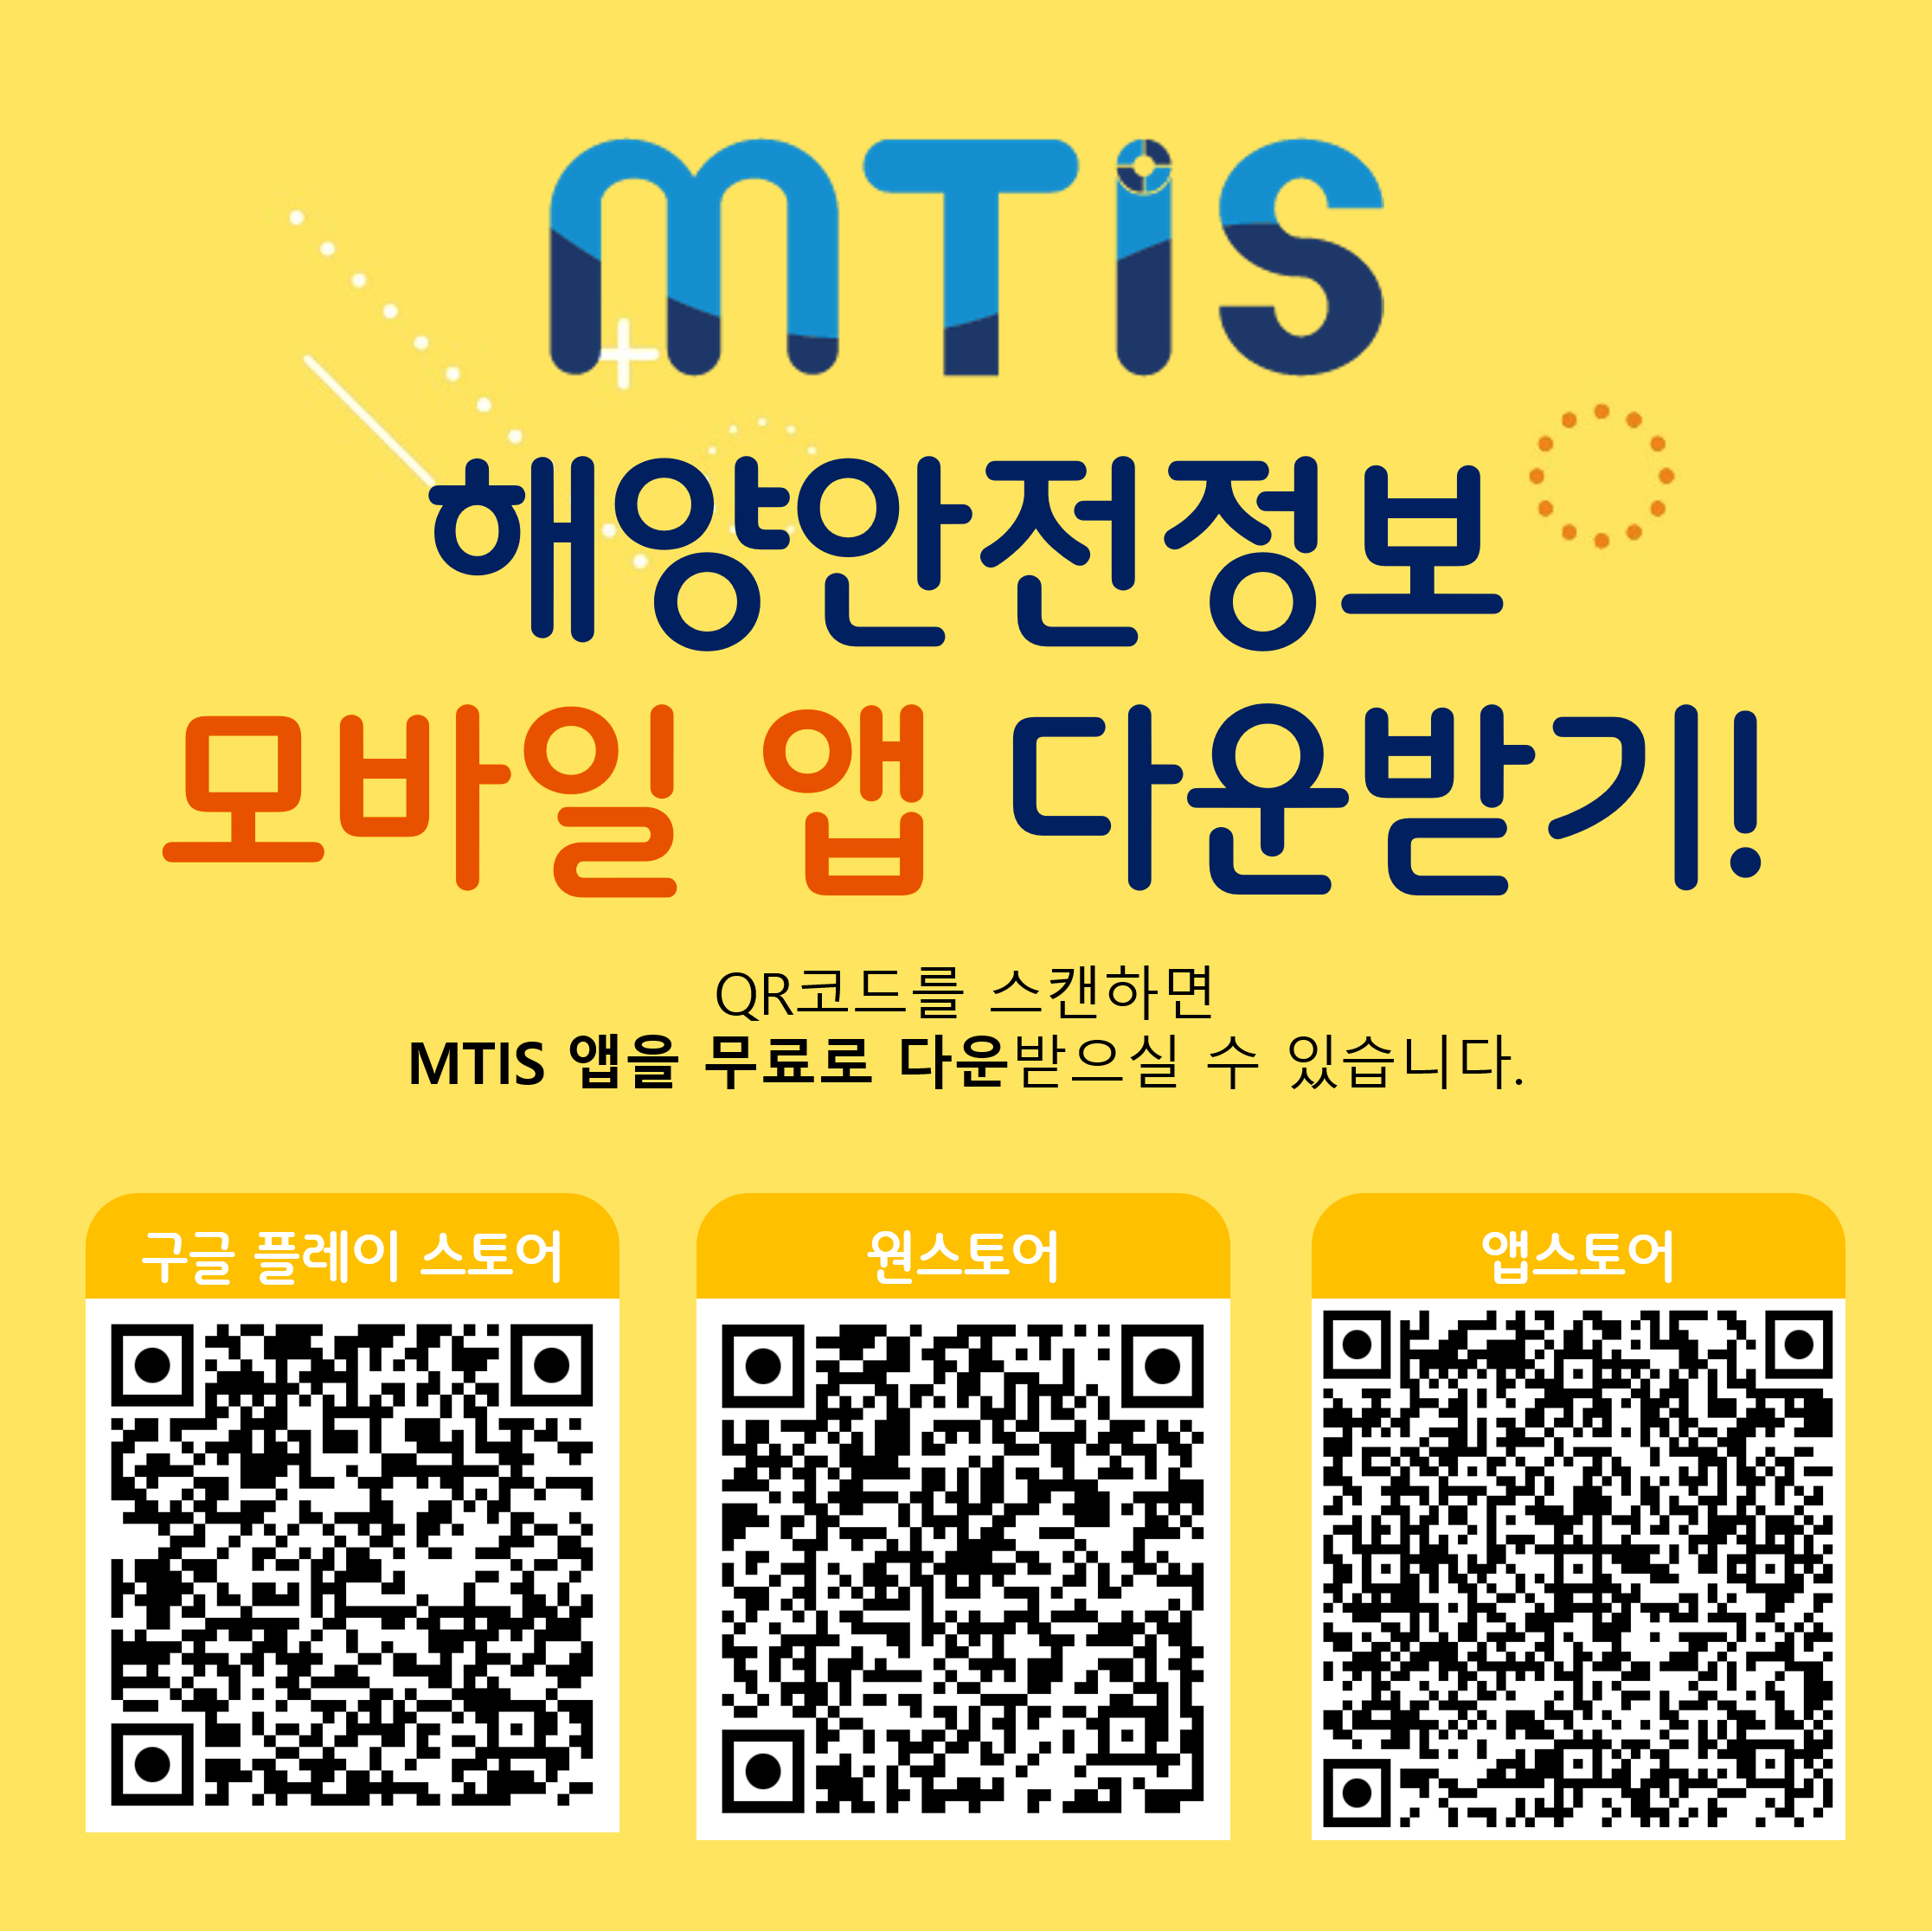 MTIS 해양안전정보 모바일 앱 다운받기!
QR코드를 스캔하면 MTIS 앱을 무료로 다운 받으실수 있습니다.
구글 플레이 스토어 : https://play.google.com/store/apps/details;jsessionid=8E14A53126E2D22137C04BFE2D99F953?id=kr.or.komsa.mtis
원스토어 : https://m.onestore.co.kr/mobilepoc/apps/appsDetail.omp?prodId=0000771271
앱스토어 : https://apps.apple.com/kr/app/%ED%95%B4%EC%96%91%EA%B5%90%ED%86%B5%EC%95%88%EC%A0%84%EC%A0%95%EB%B3%B4/id6462842483